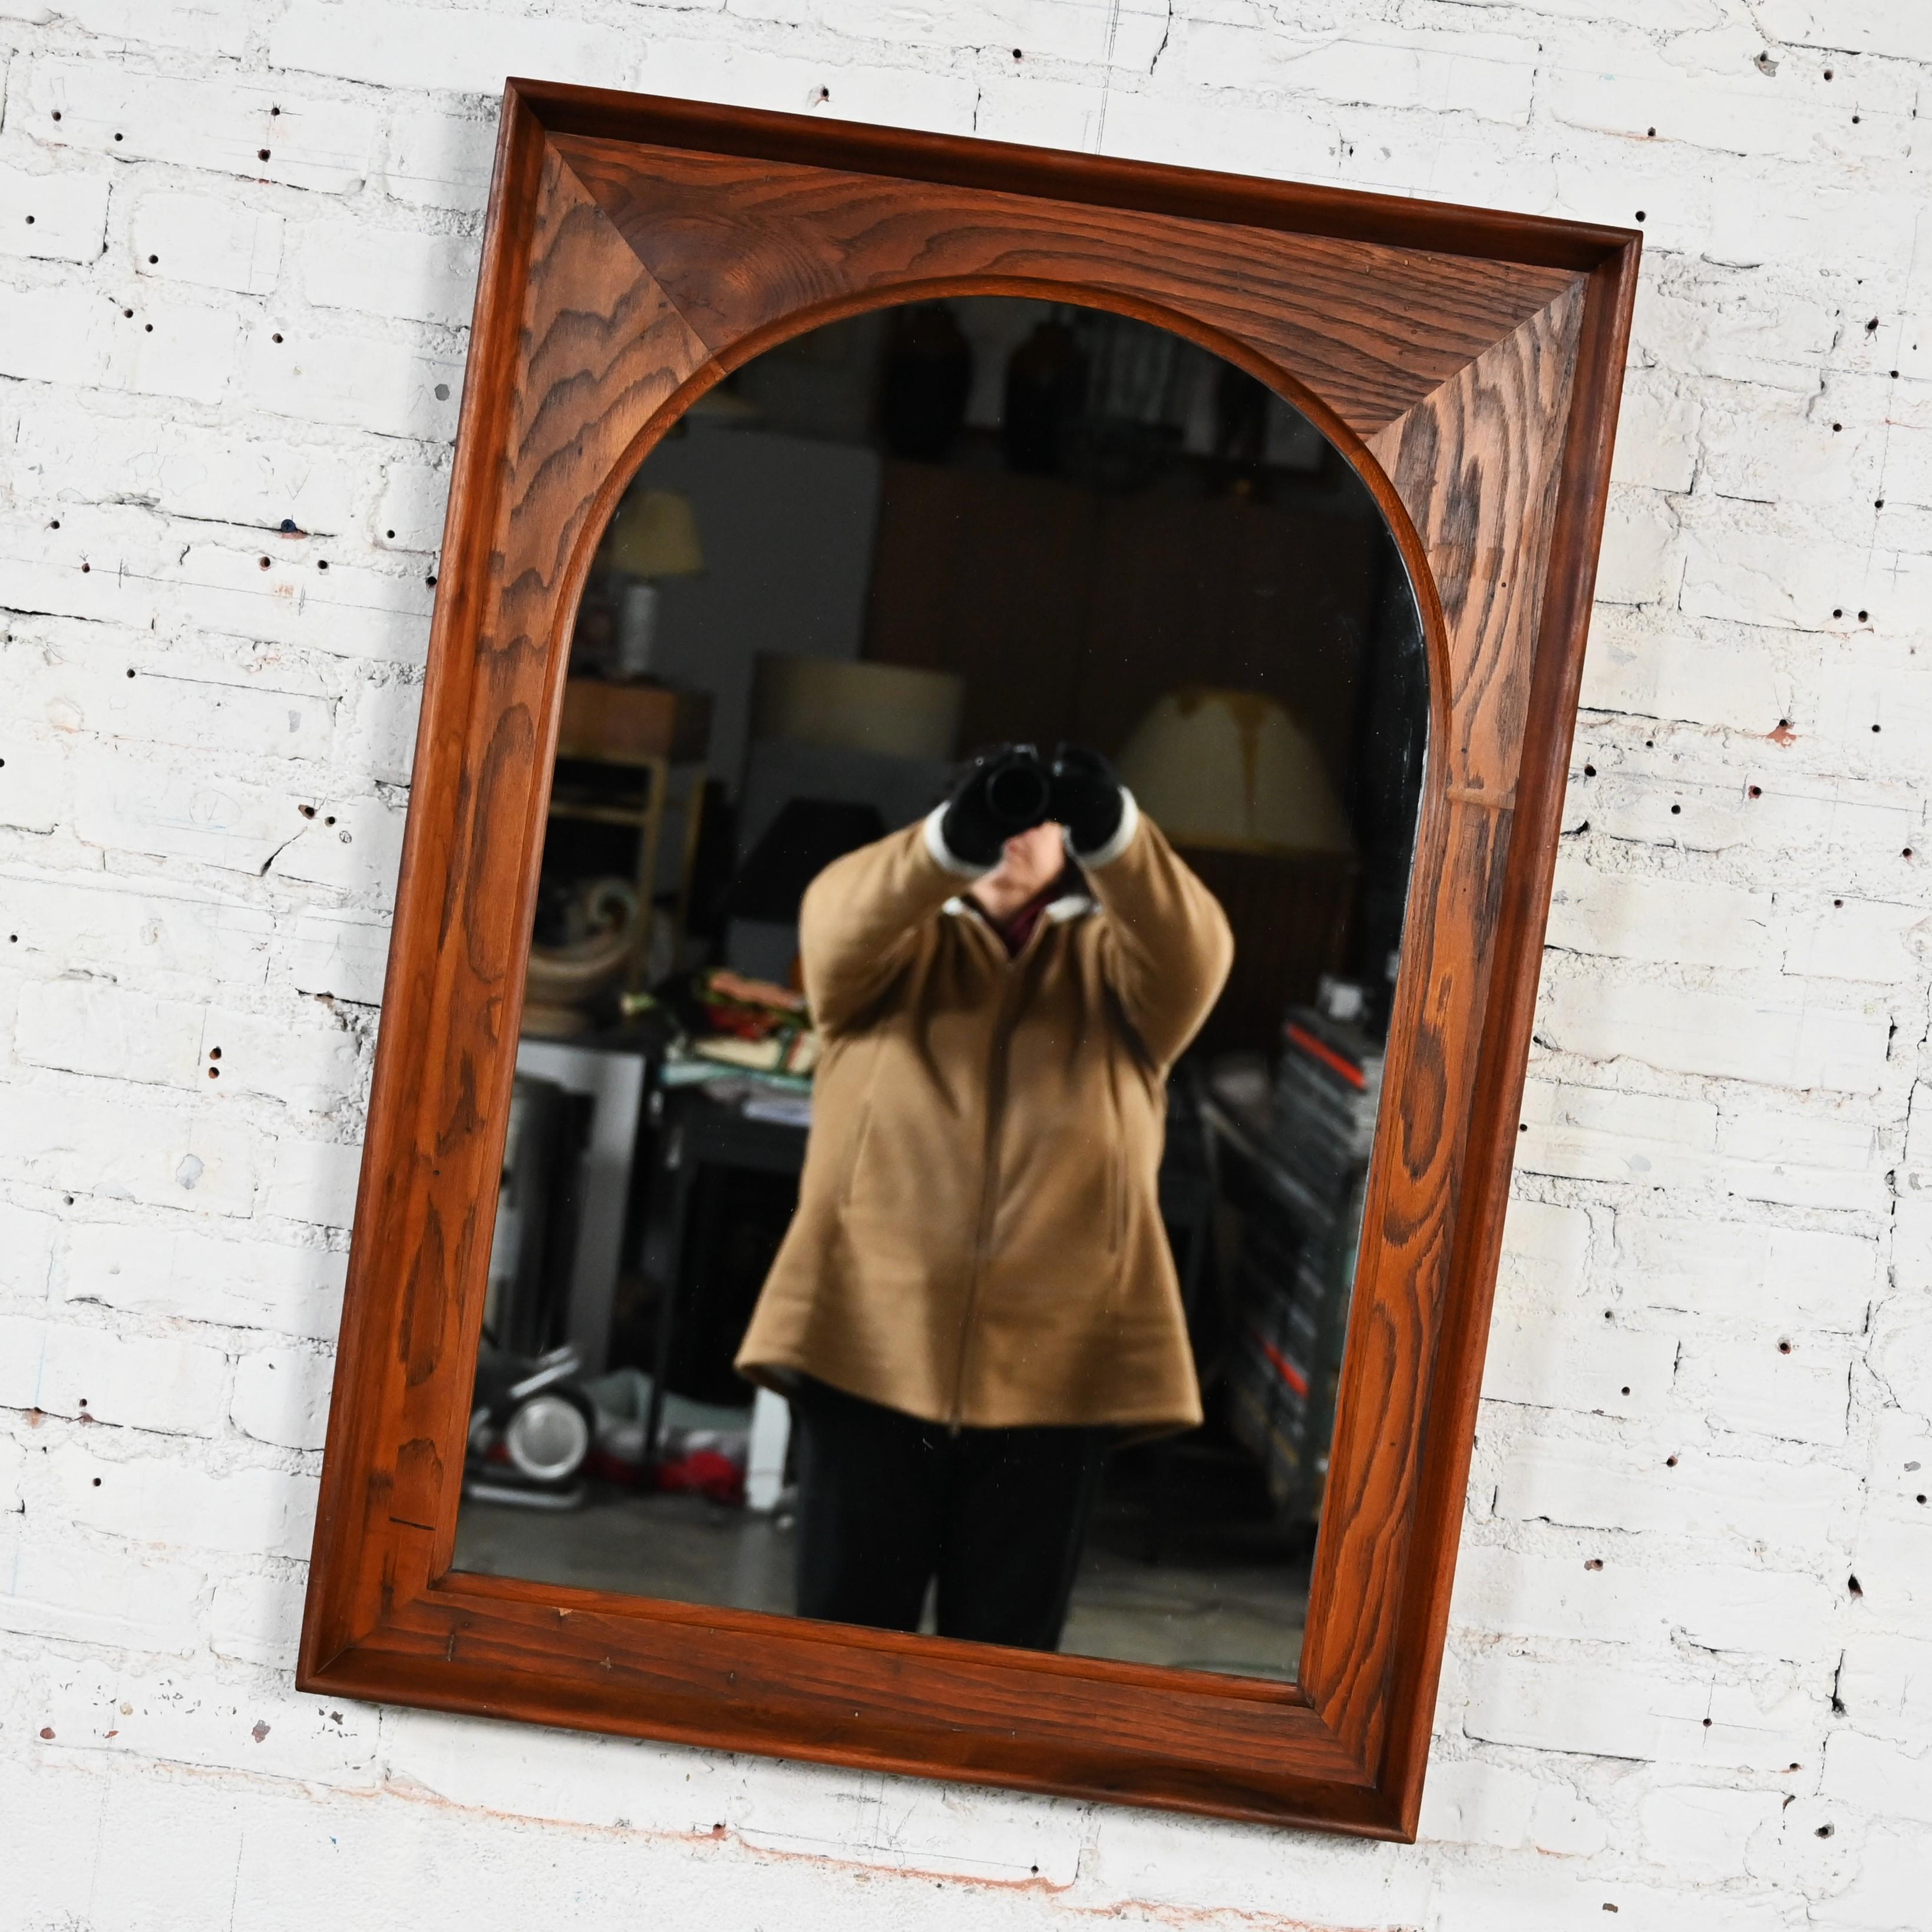 American Mid Century Modern Framed Arch Mirror by Dillingham Pecky Cypress Walnut Trim For Sale